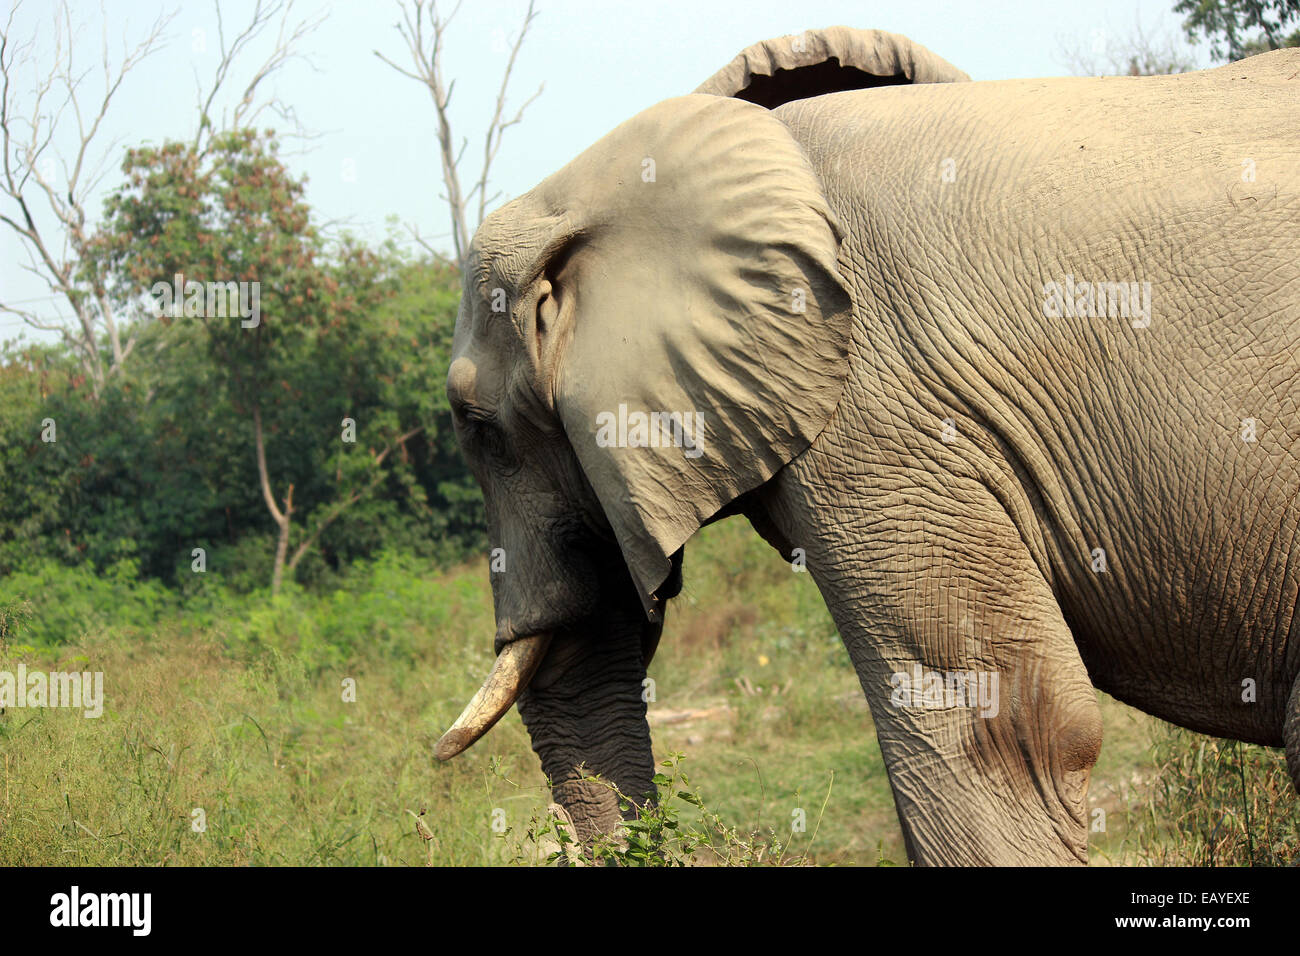 Elephant, Elephantine, Proboscidea, tusk, big ears, big body in New Delhi, India, Stock Photo